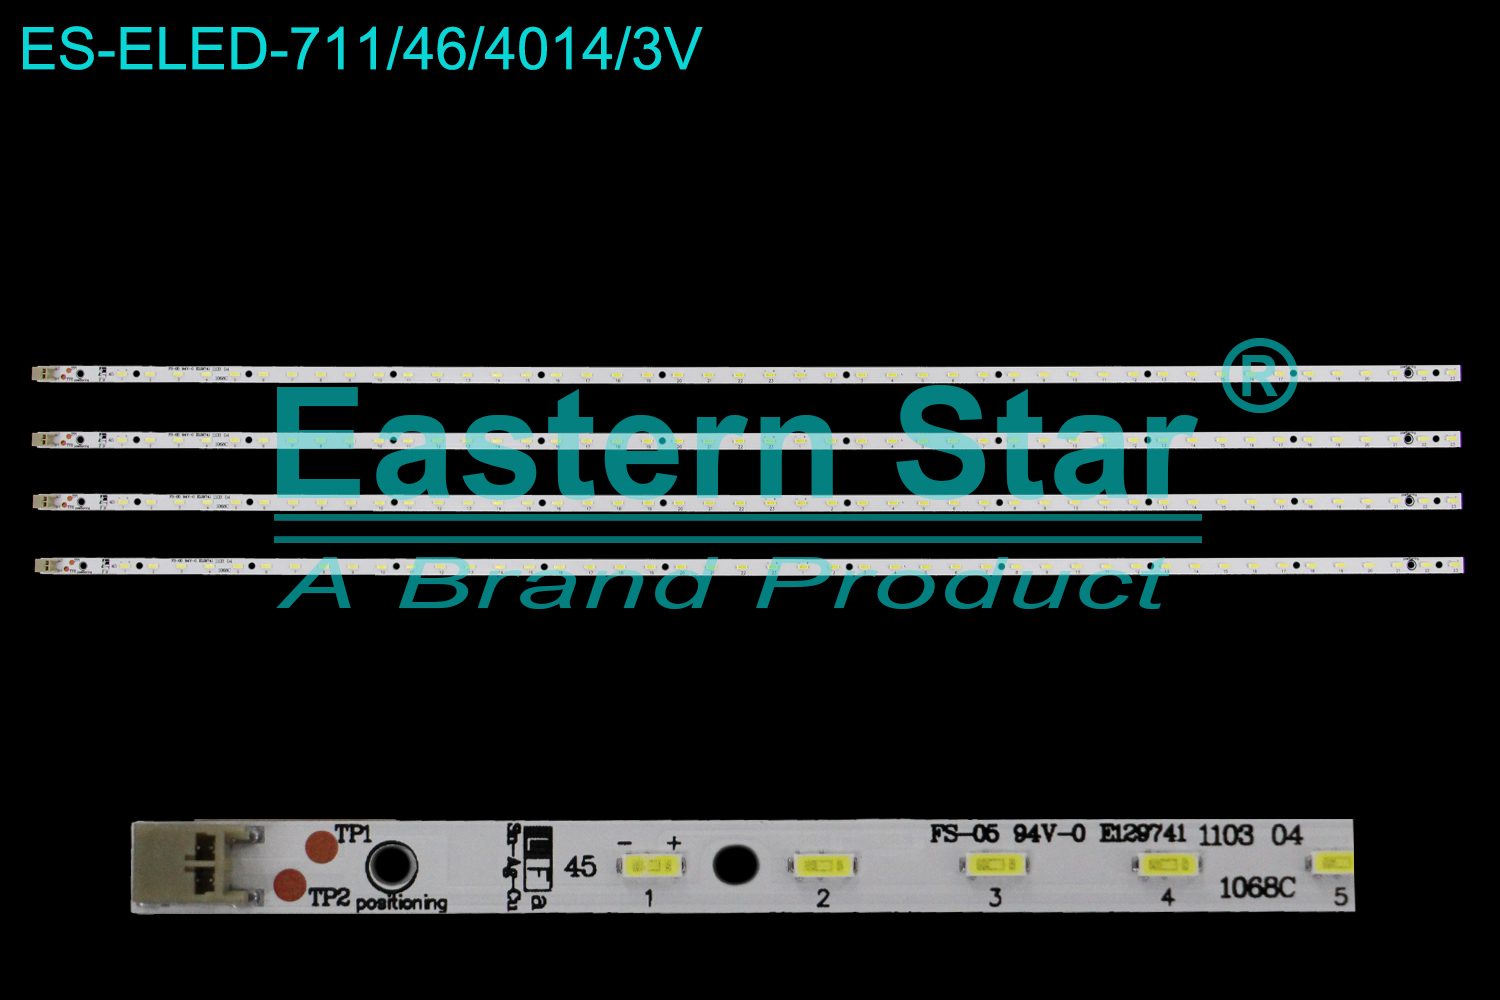 ES-ELED-711 ELED/EDGE TV backlight use for 46''  Sharp LCD-46LX530A  SLED-2011SSP46-46-GD-REV0 FS-05 94V-0 E129741 1103 04 LED STRIPS(4)